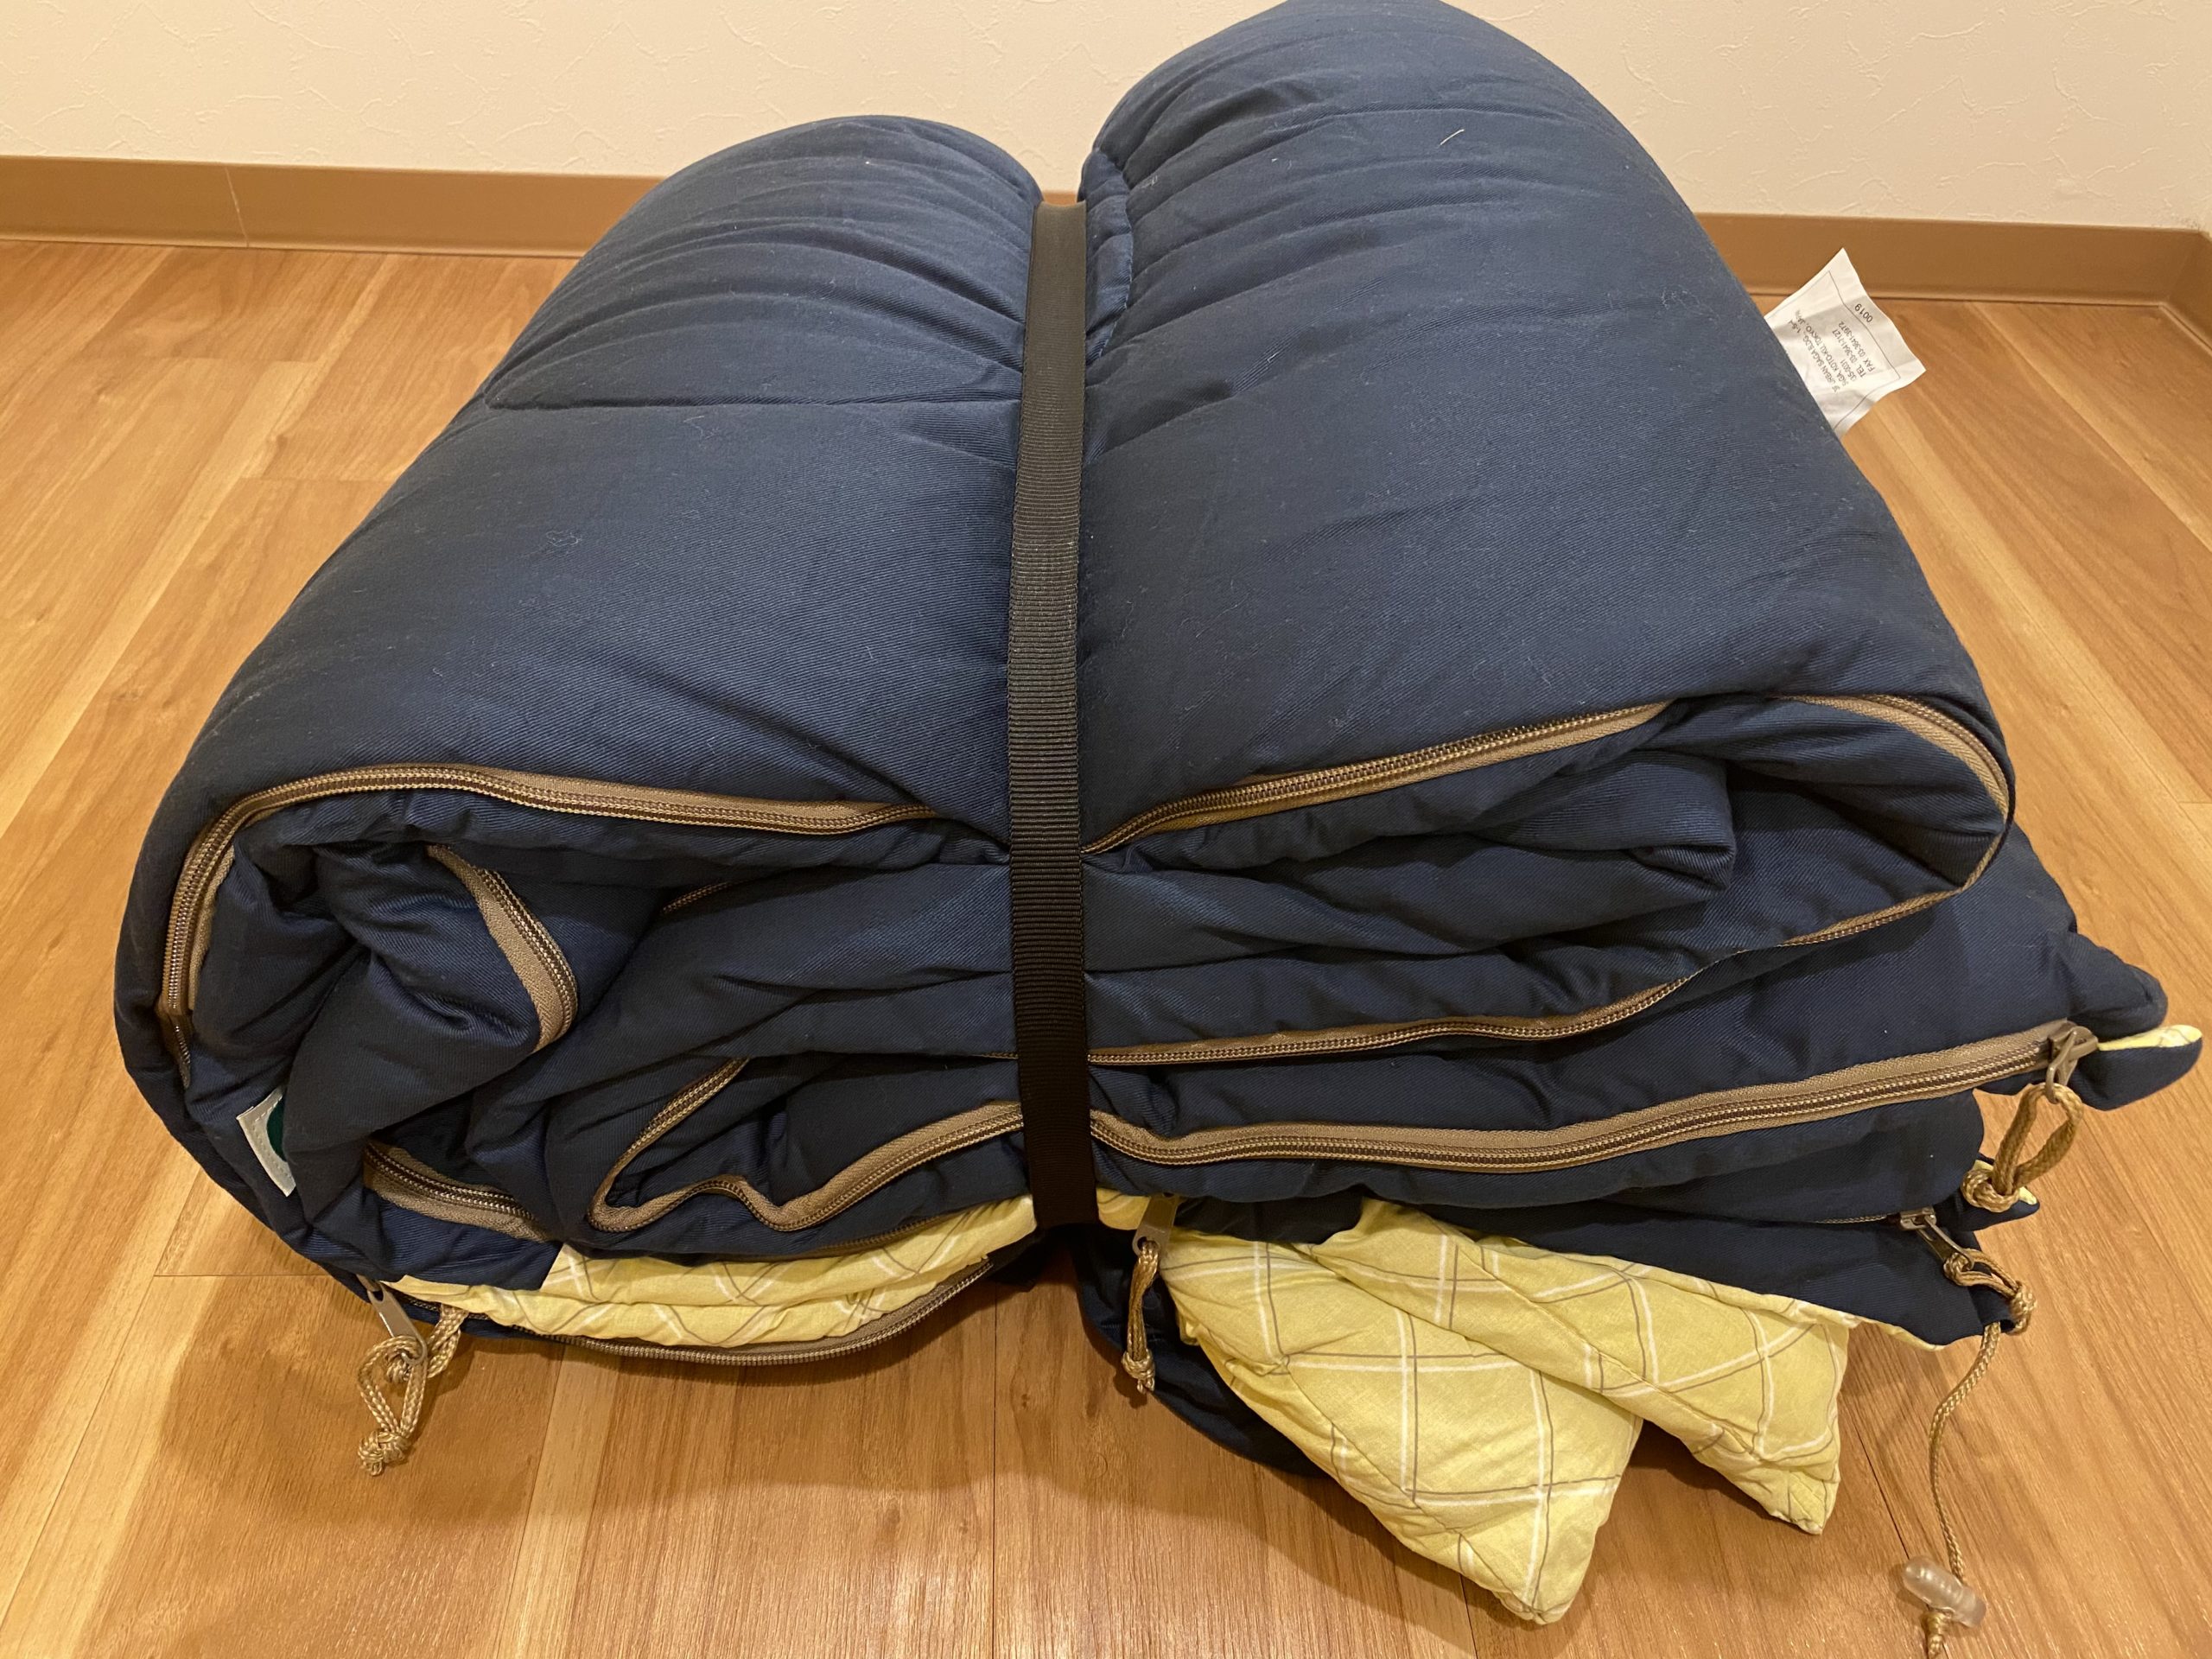 ogawa フィールドドリームDX-3 寝袋 布団シュラフ - 寝袋/寝具